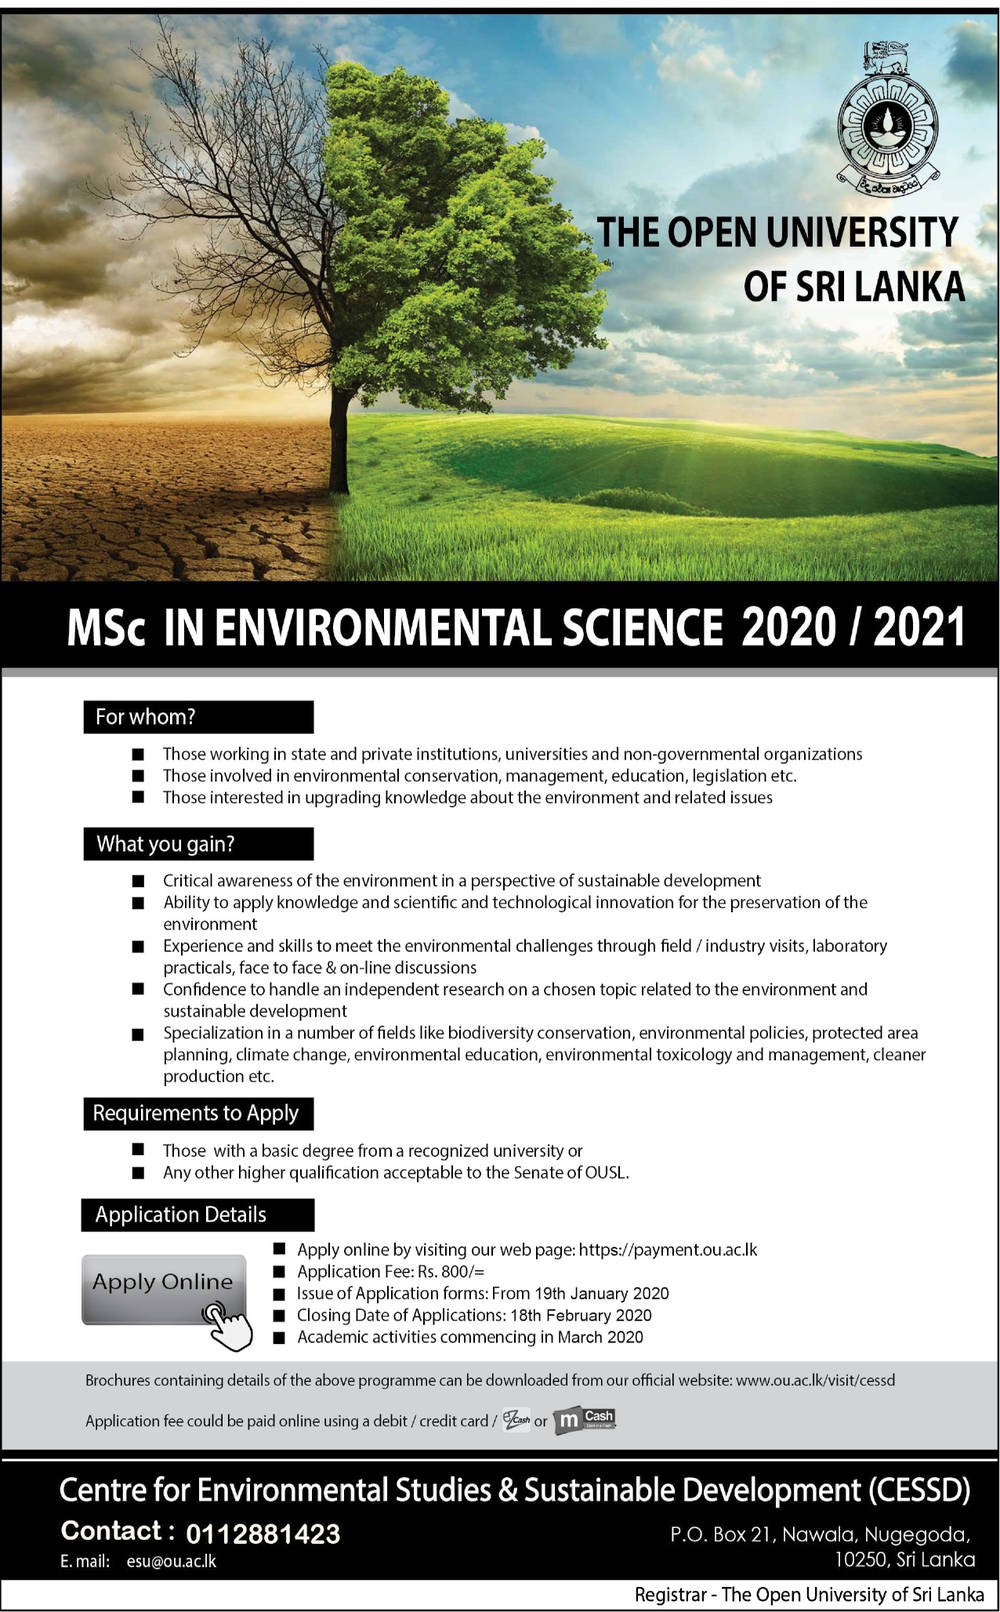 MSc in Environmental Science (2020/2021) - The Open University of Sri Lanka